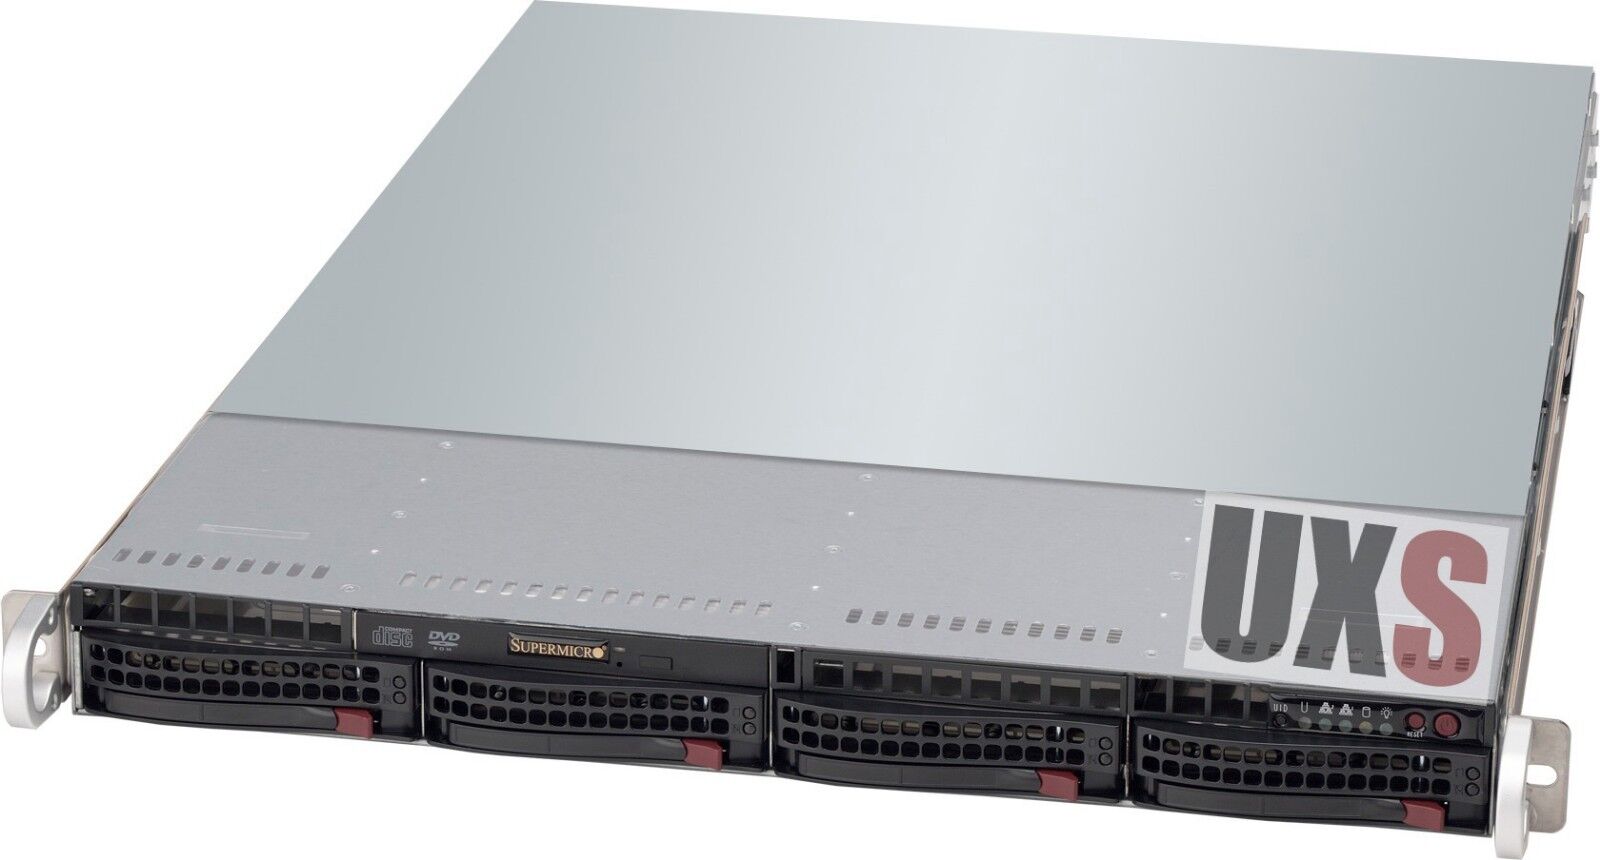 UXS Server 1U Supermicro X9DRi-LN4F+ 2x Intel Xeon E5-2670 V2 10 Core 128GB RAM